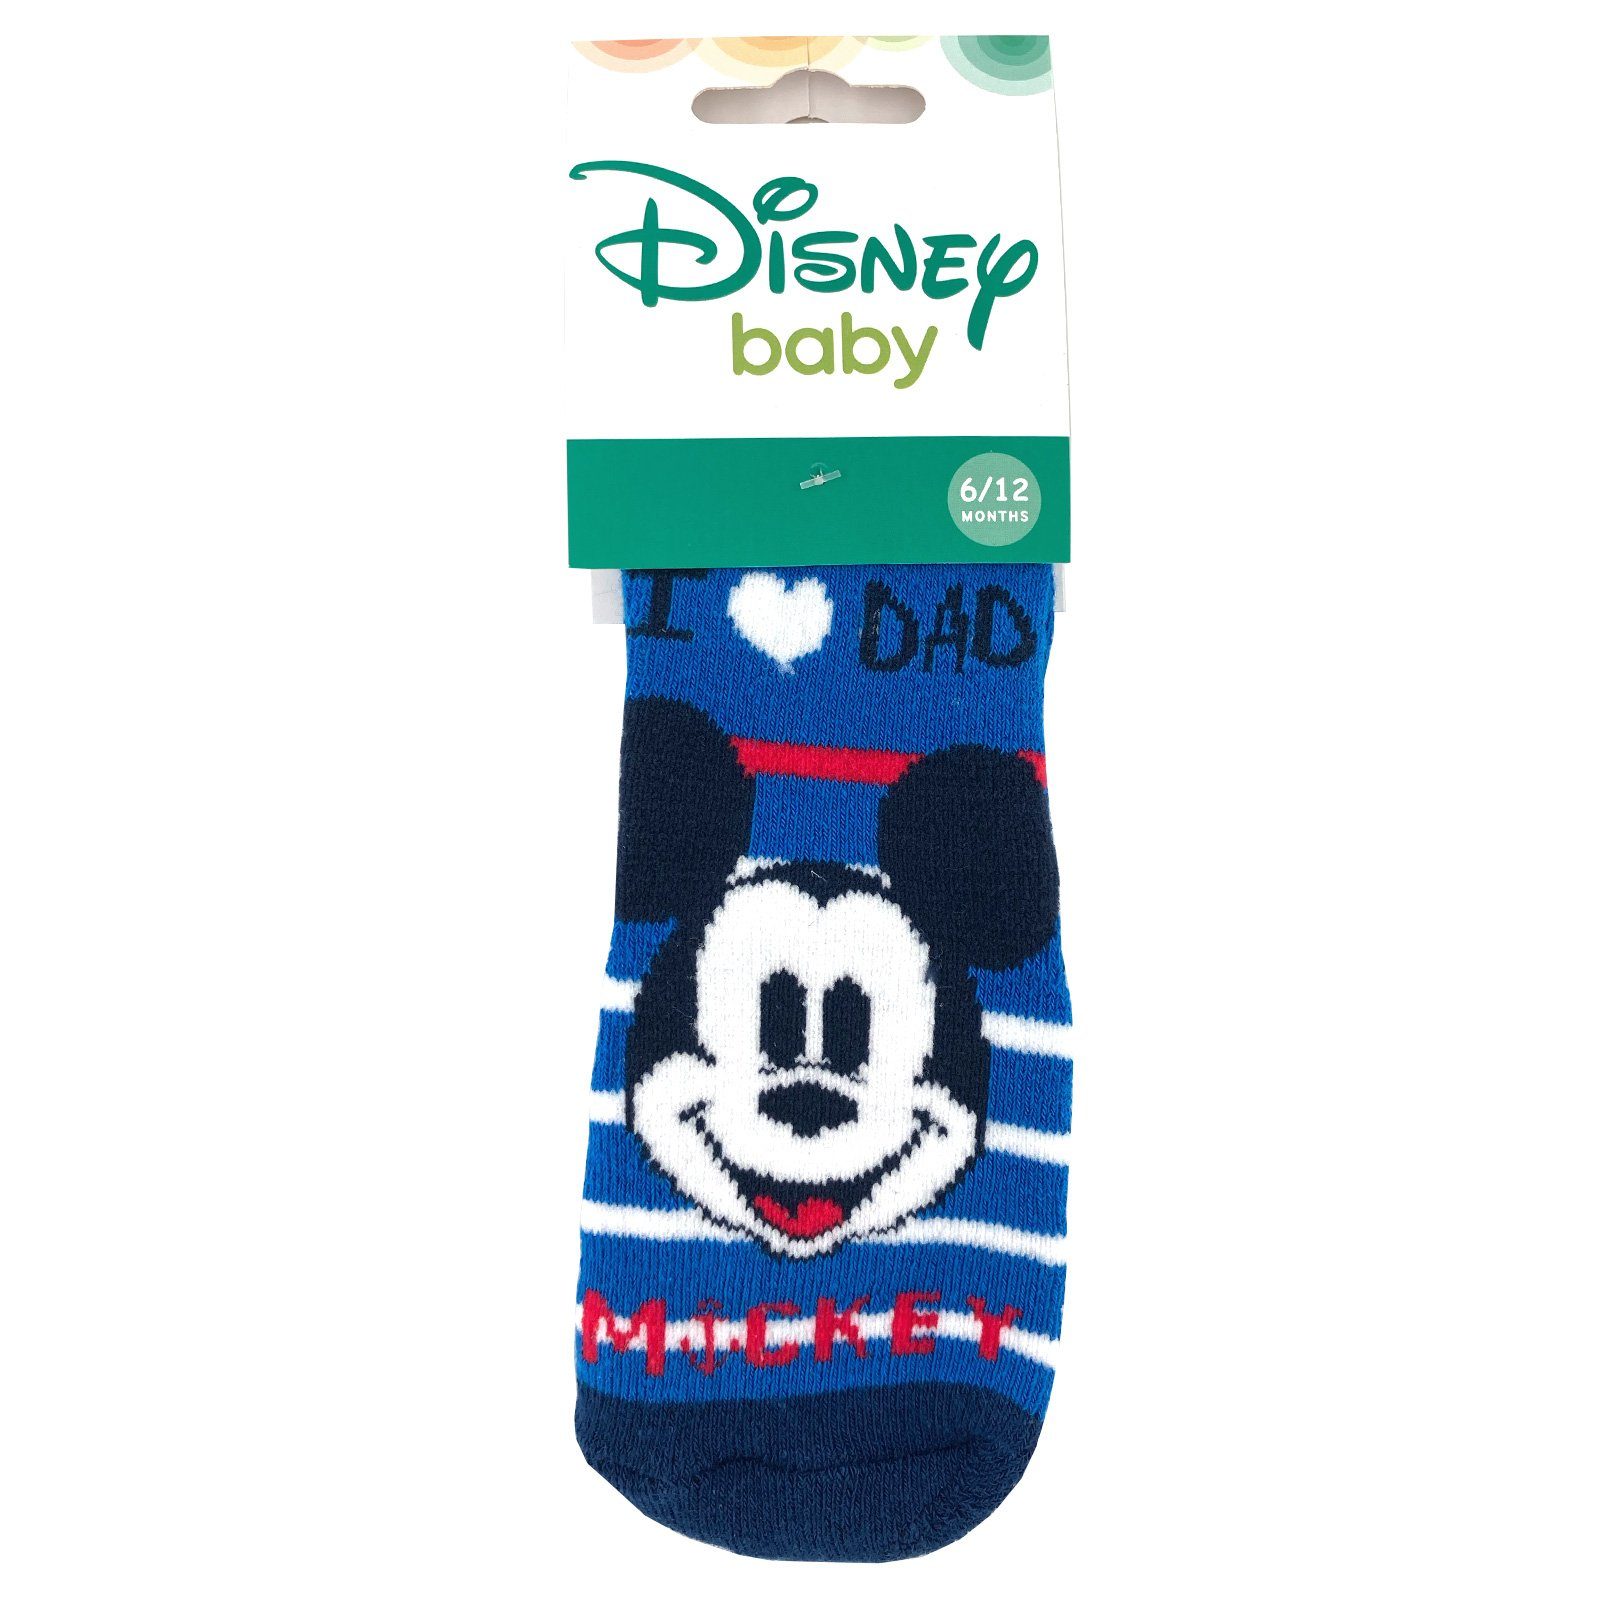 0-6 Monate 6-12 Monate Junge Disney Mickey Mouse Maus Baby Socken Strümpfe Gr 